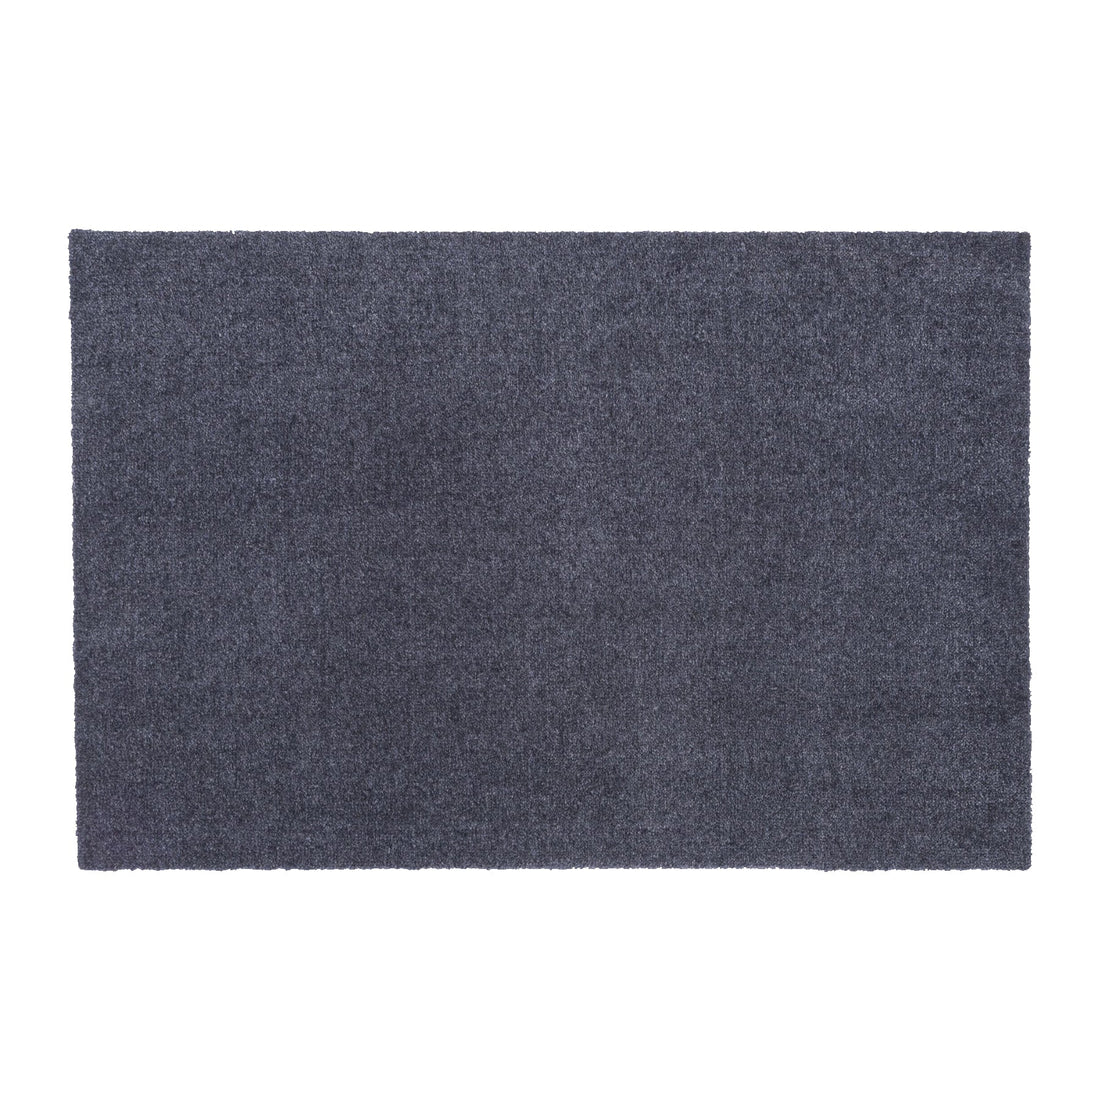 Floor mat 60 x 90 cm - Uni Color/Gray